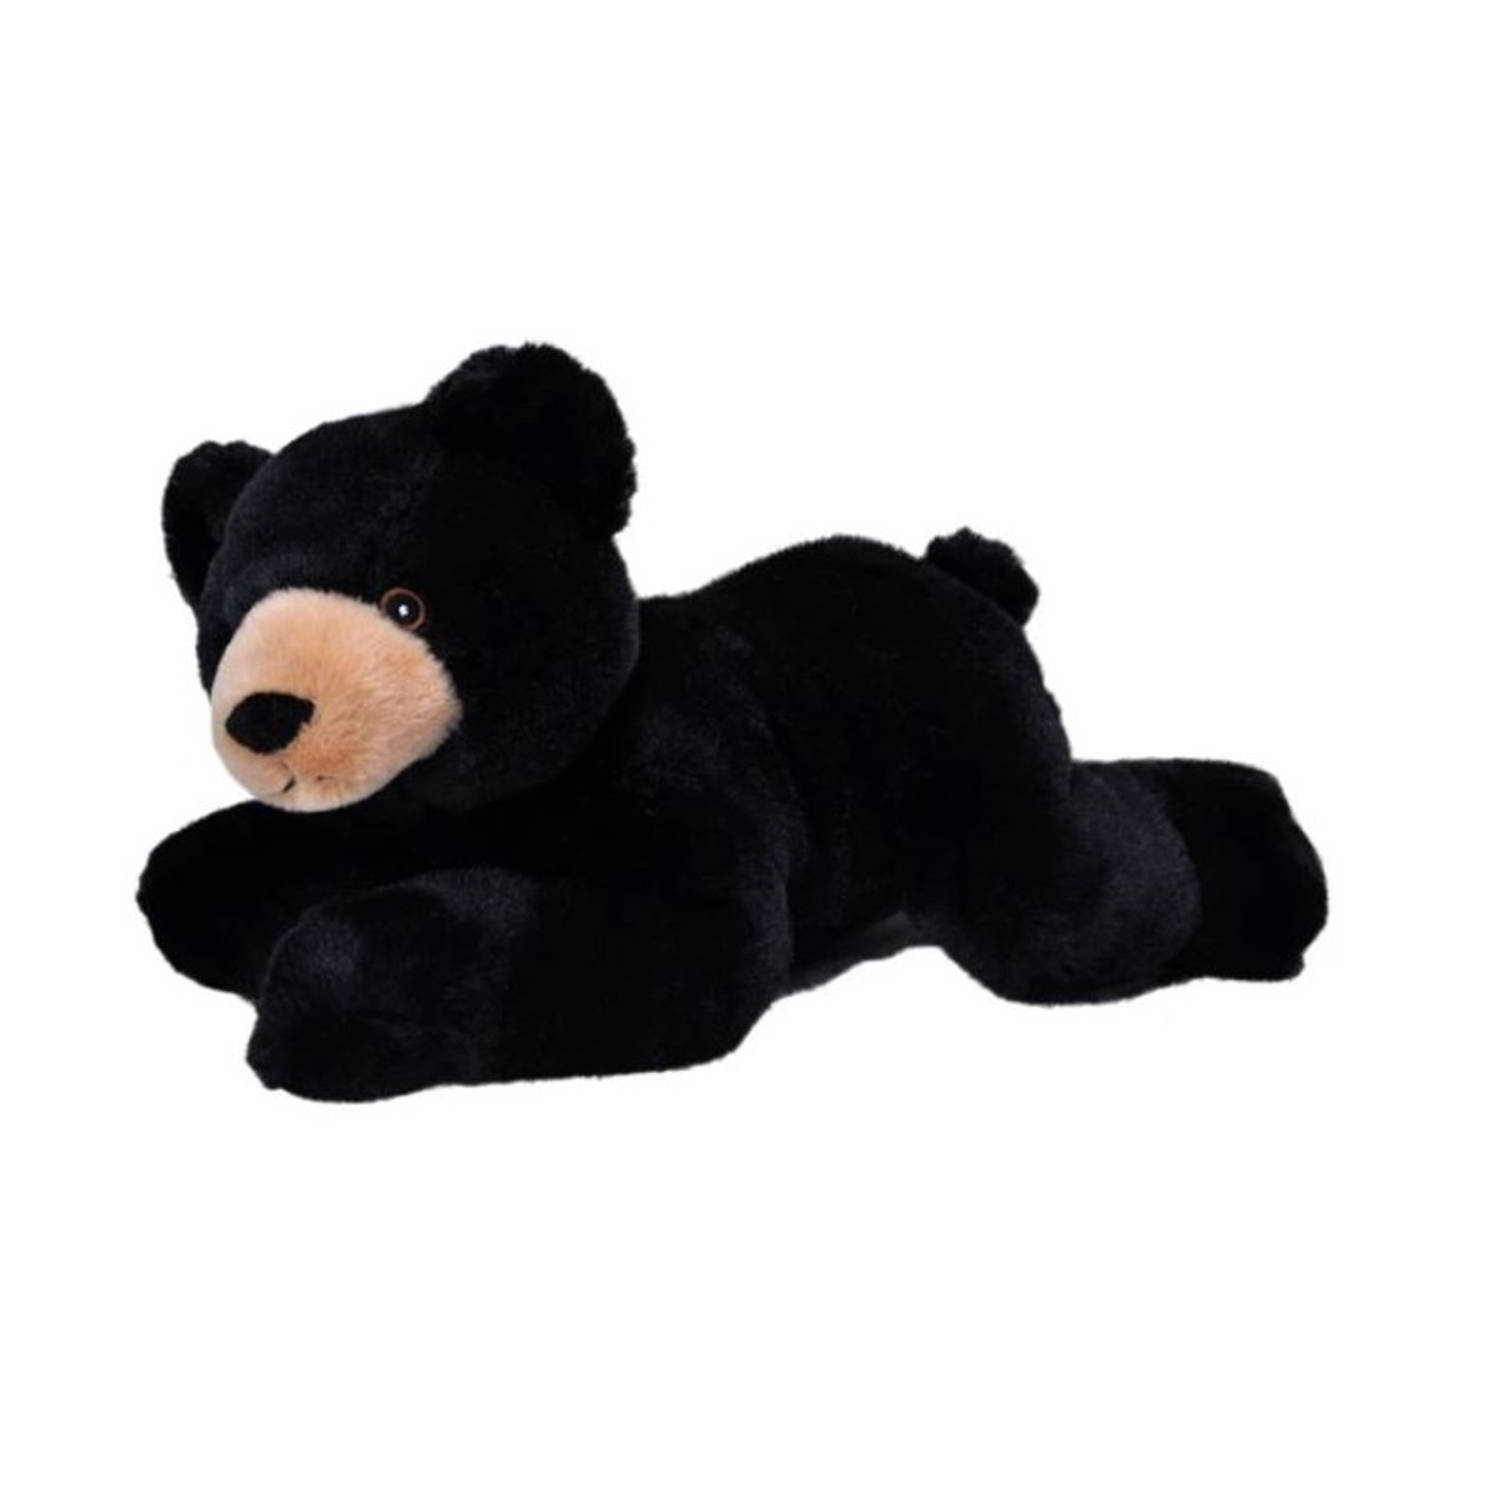 Wild Republic knuffel zwarte beer Ecokins junior 30 cm pluche zwart